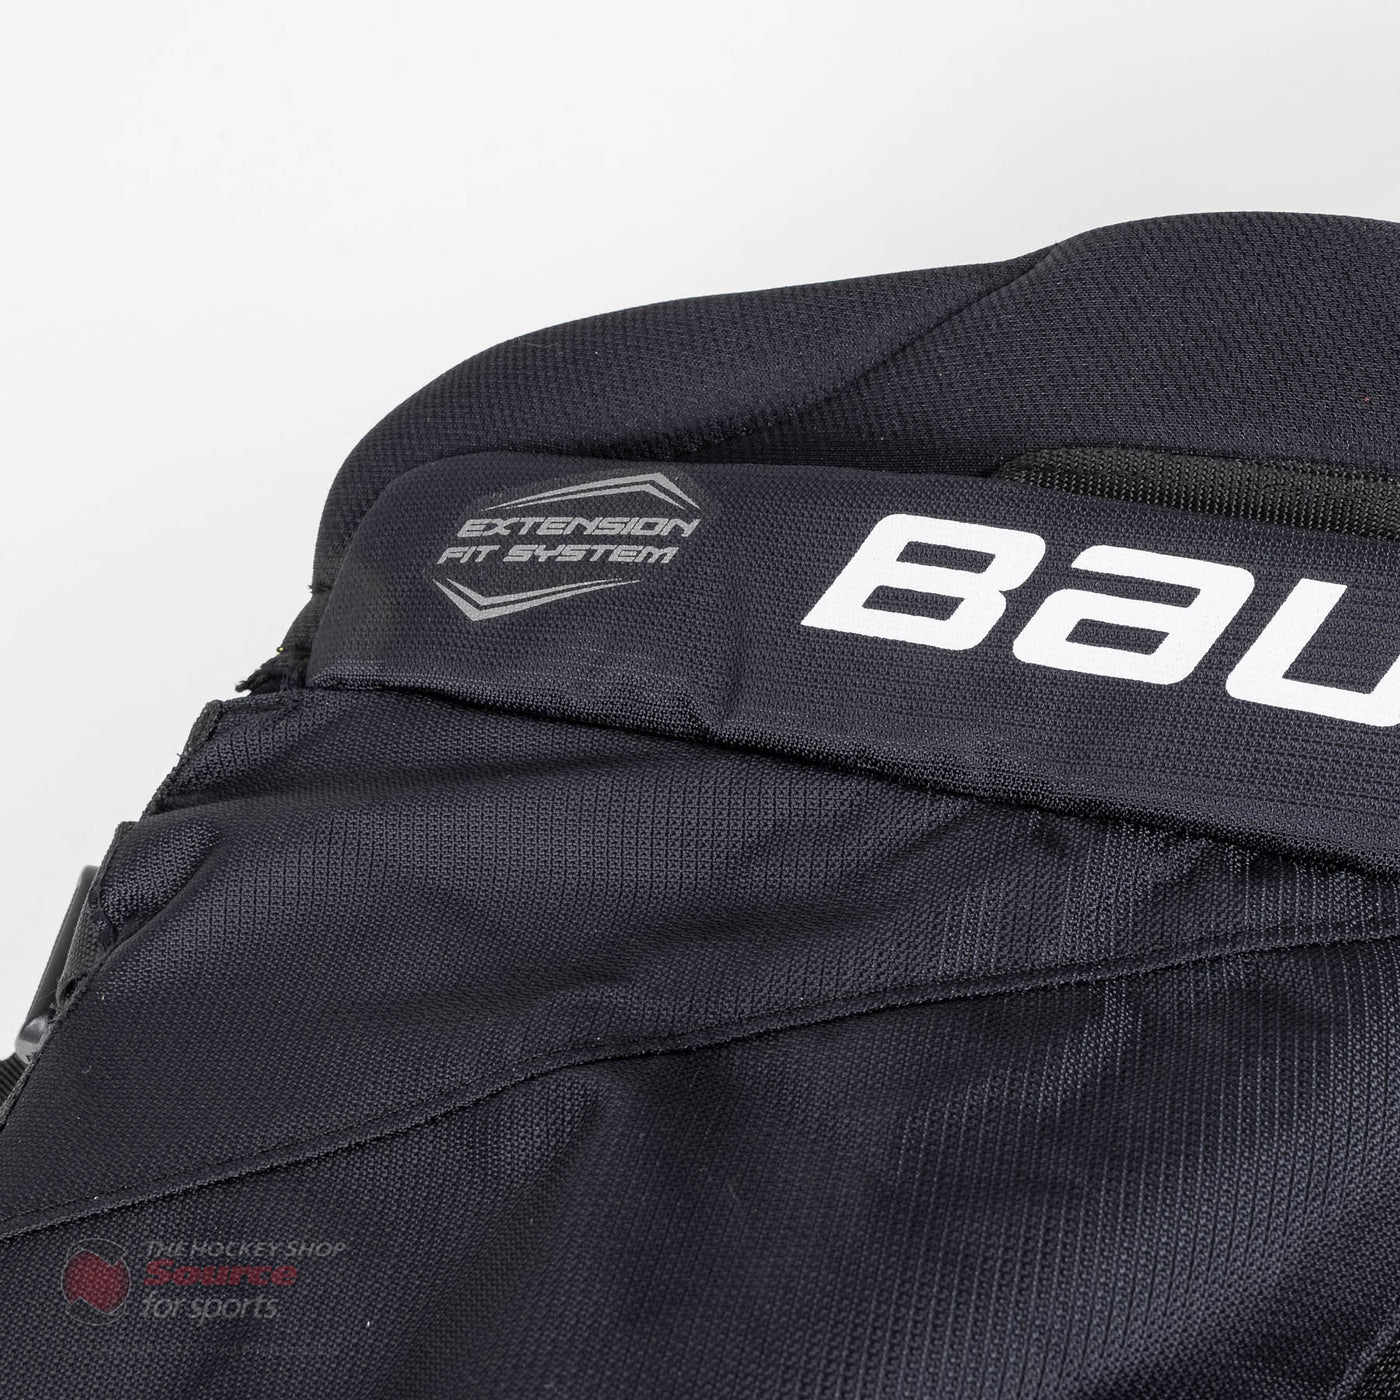 Bauer Supreme 3S Junior Hockey Pants